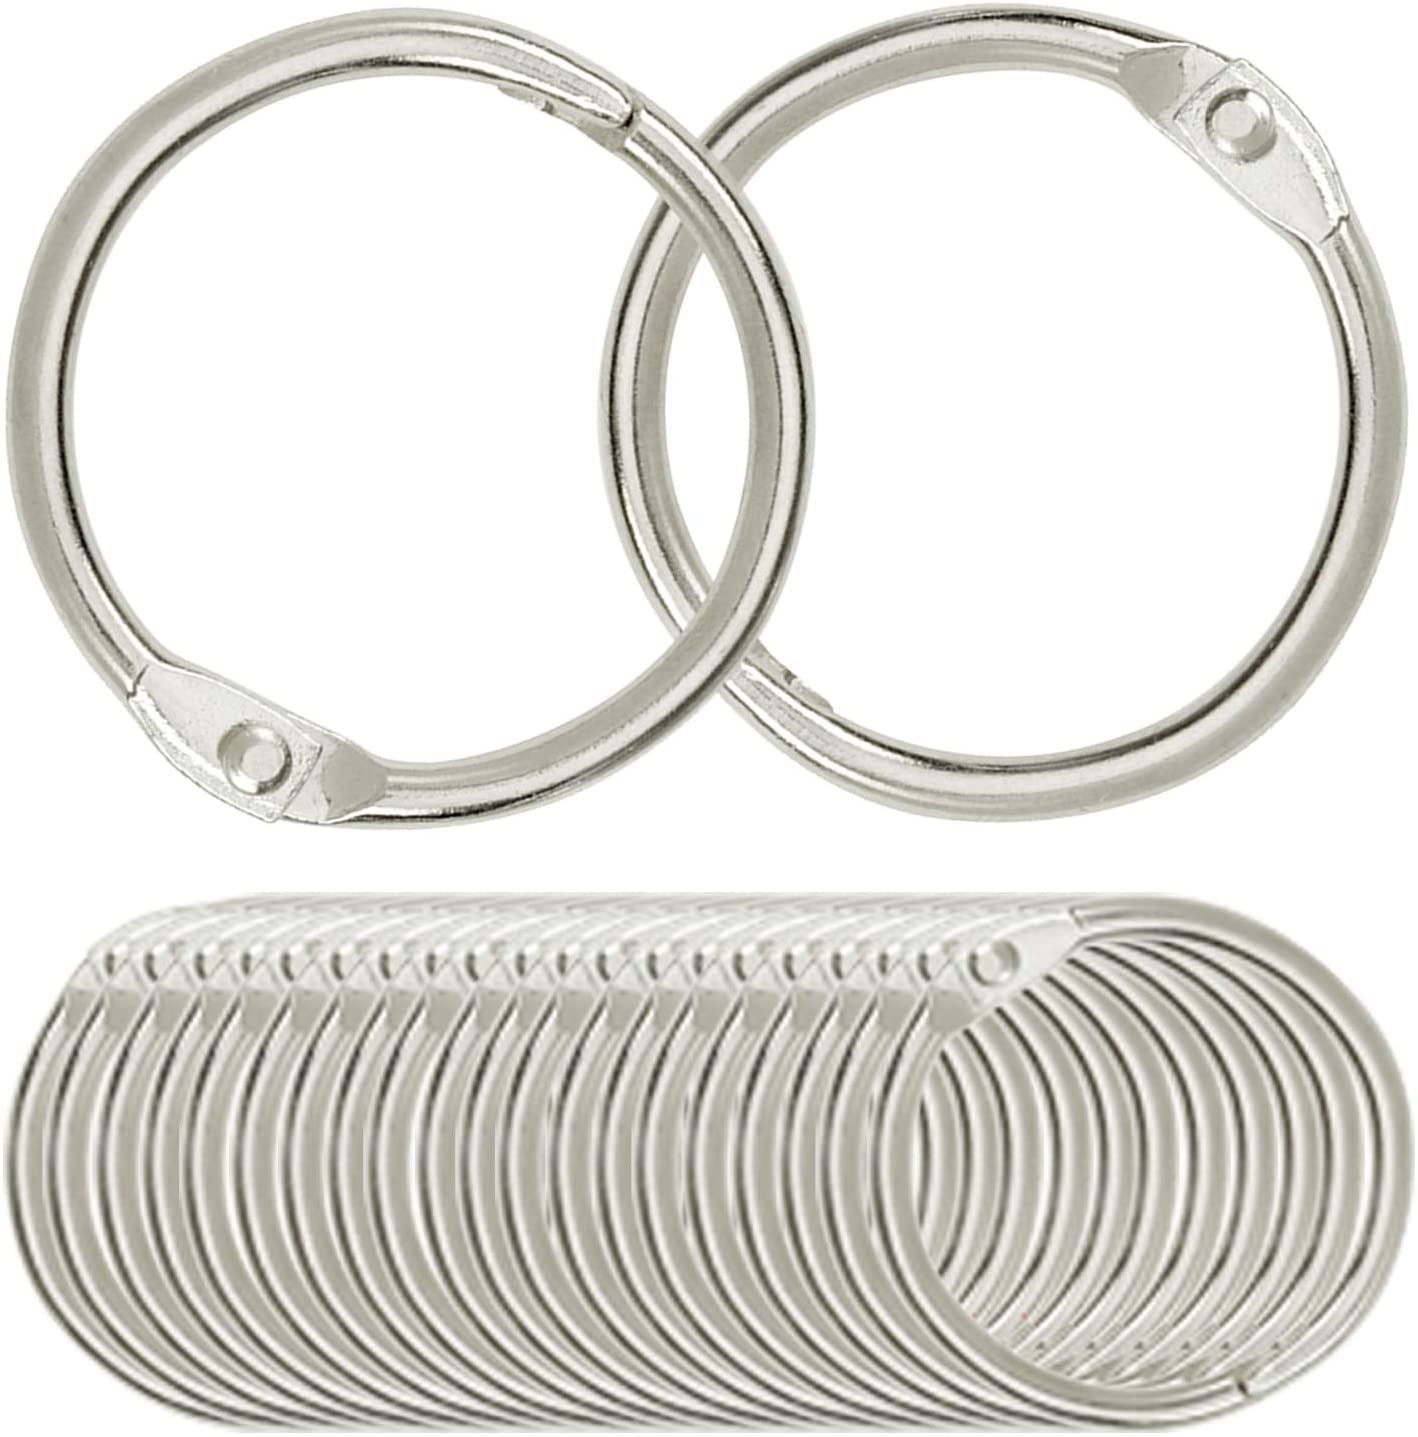 Loose-Leaf Binder Rings, 1.5 Inch Size, Silver, 100 pack